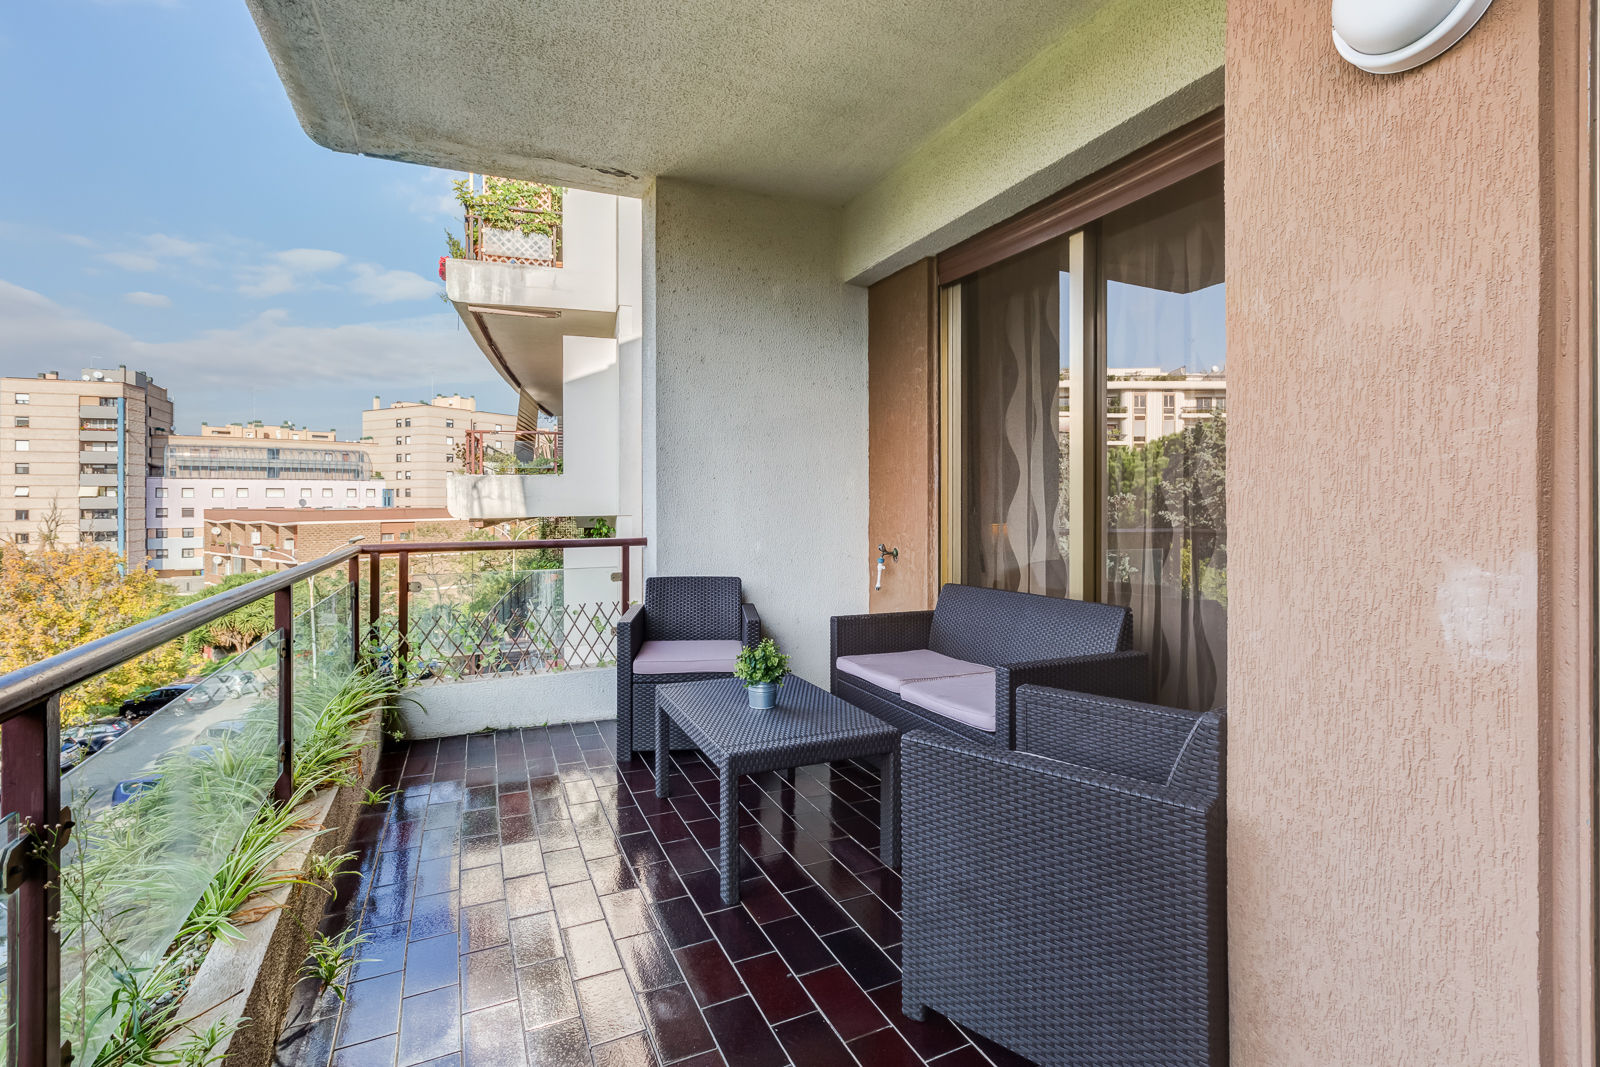 Appartamento Laurentina - Roma, Luca Tranquilli - Fotografo Luca Tranquilli - Fotografo Balcones y terrazas modernos